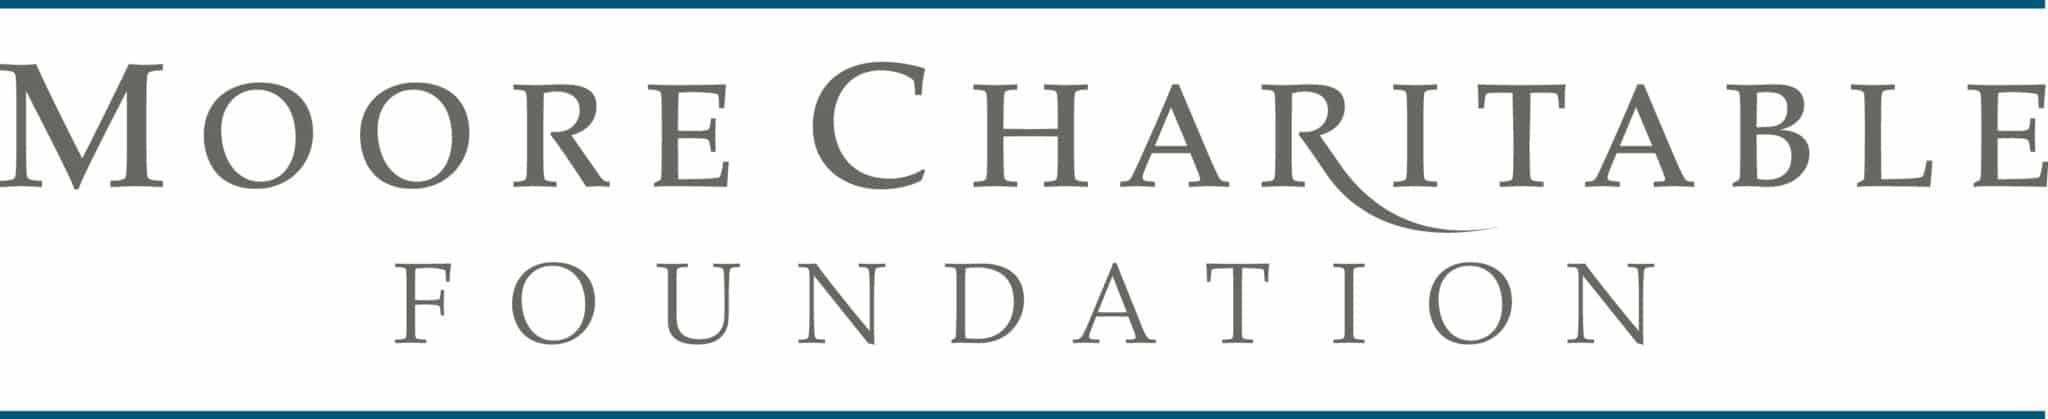 Moore_Charitable_Foundation_logo